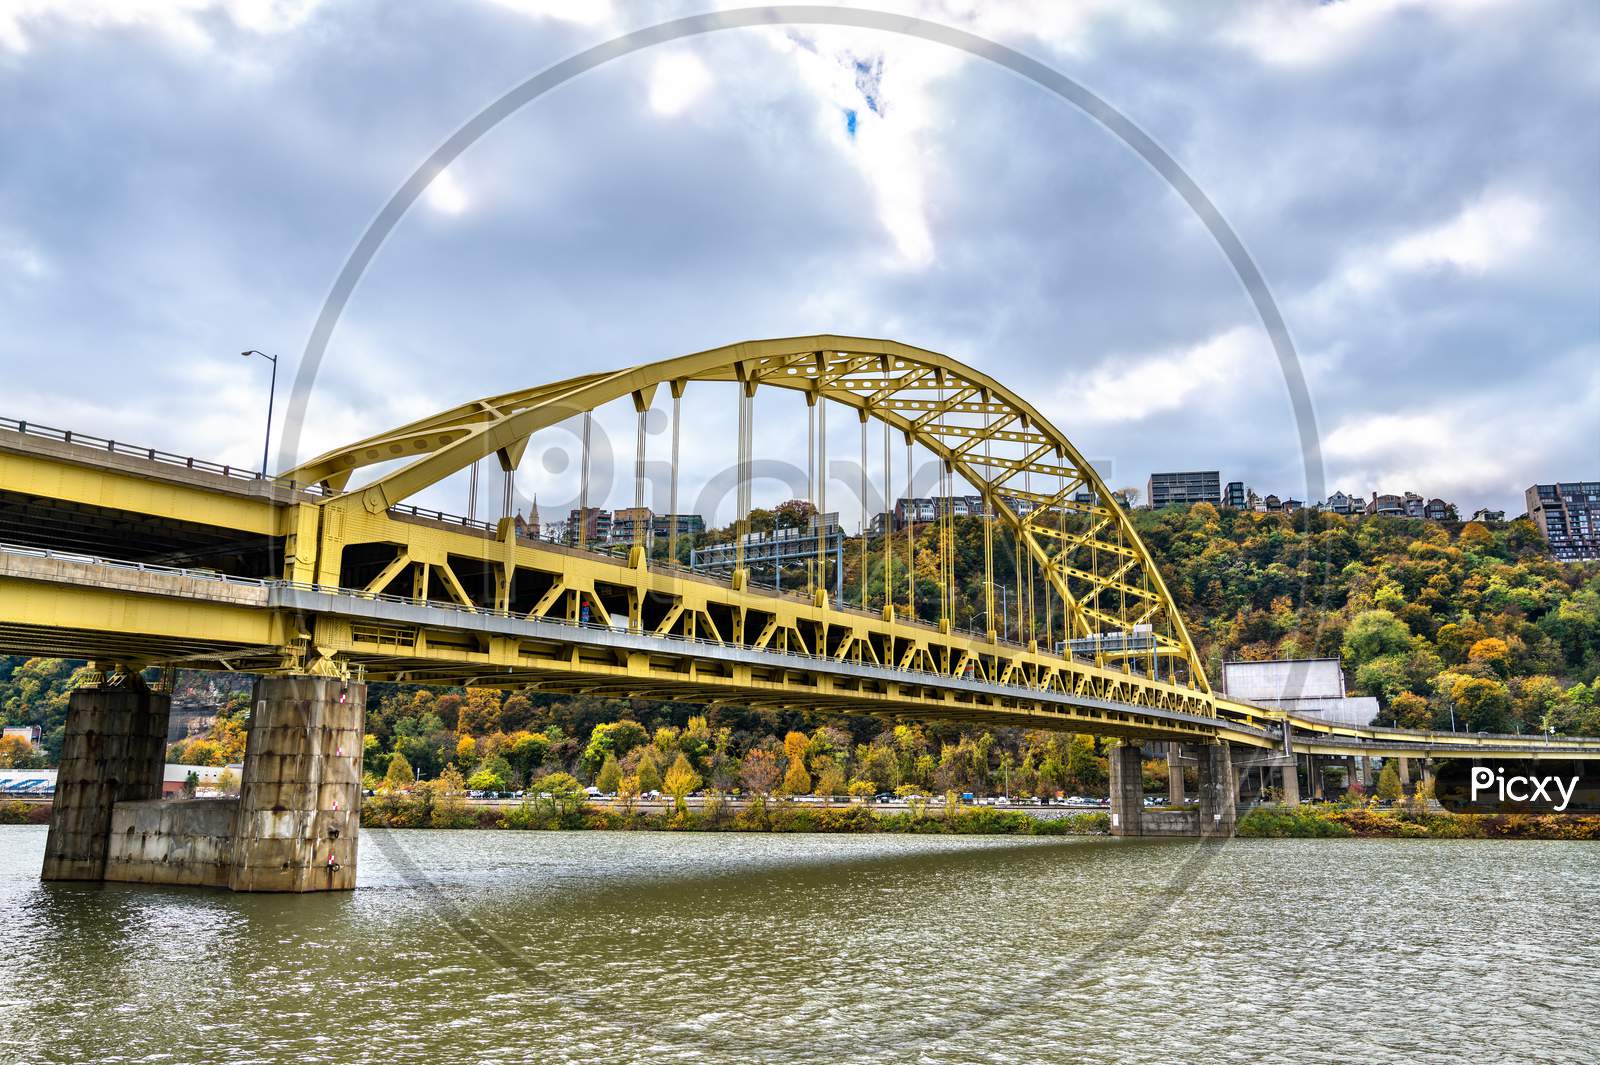 Fort Pitt Bridge Across The Monongahela River In Pittsburgh, Pennsylvania